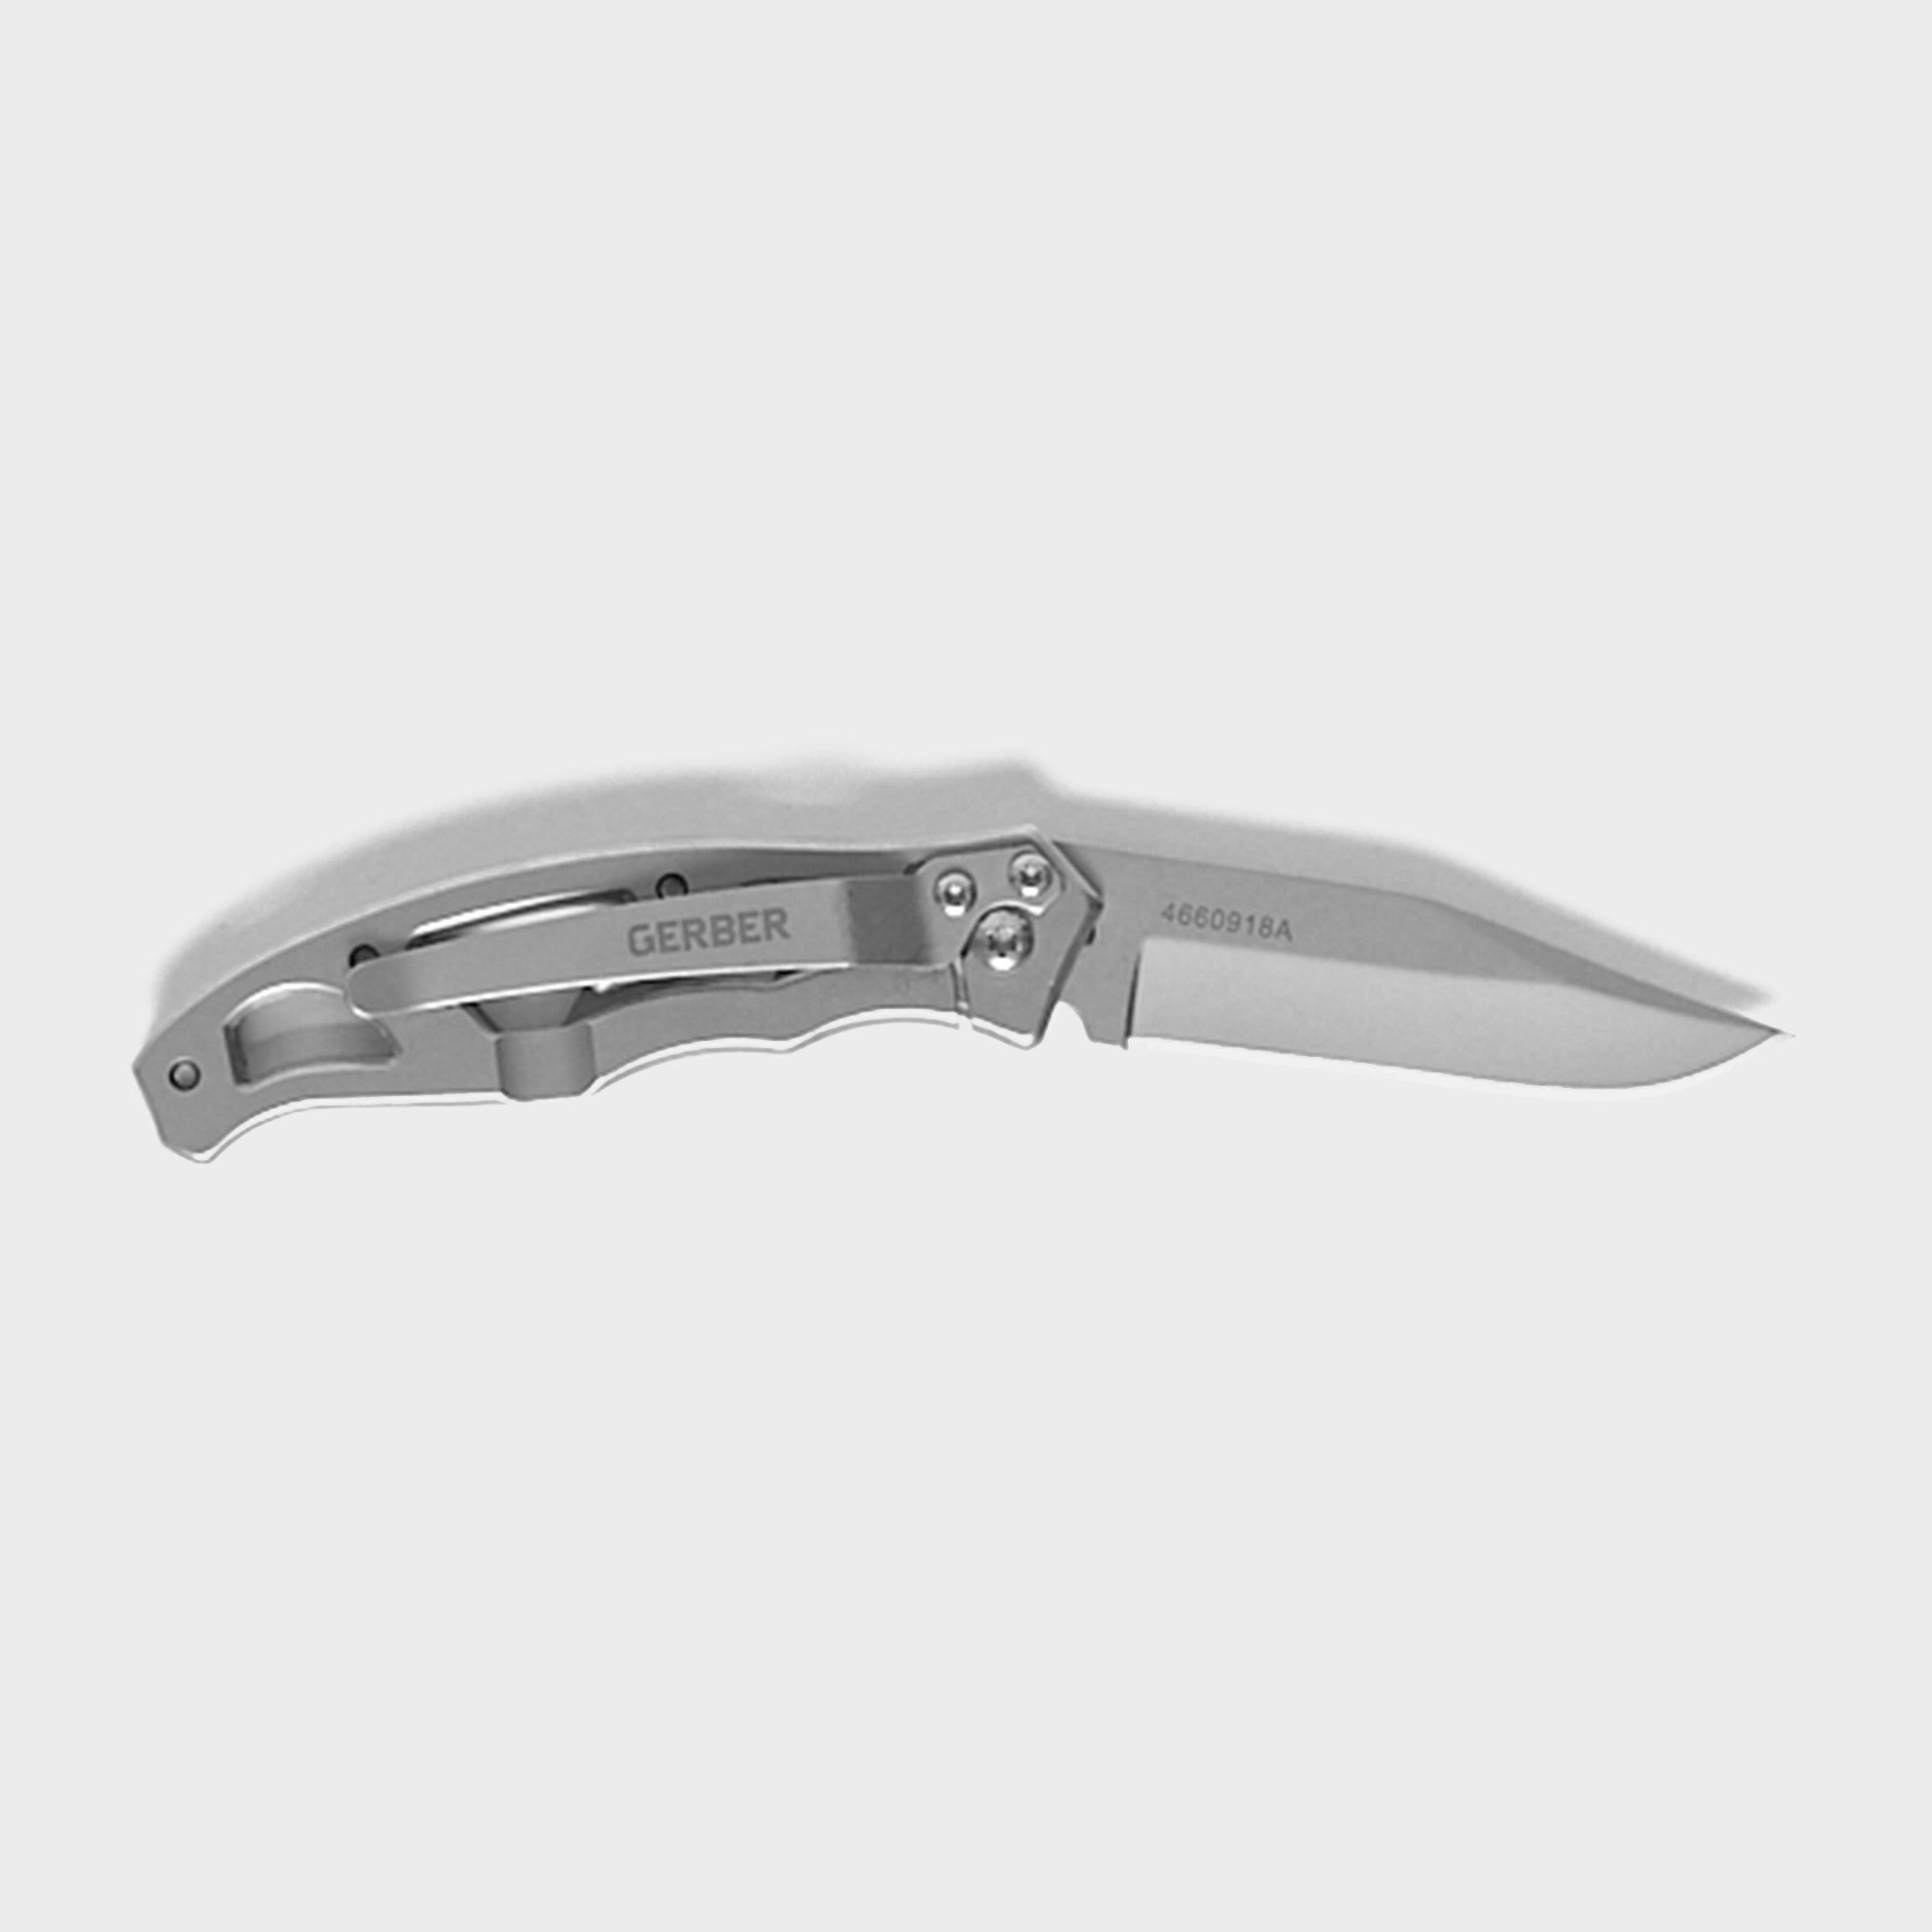 Gerber Paraframe Mini Folding Knife - Knif/knif  Knif/knif